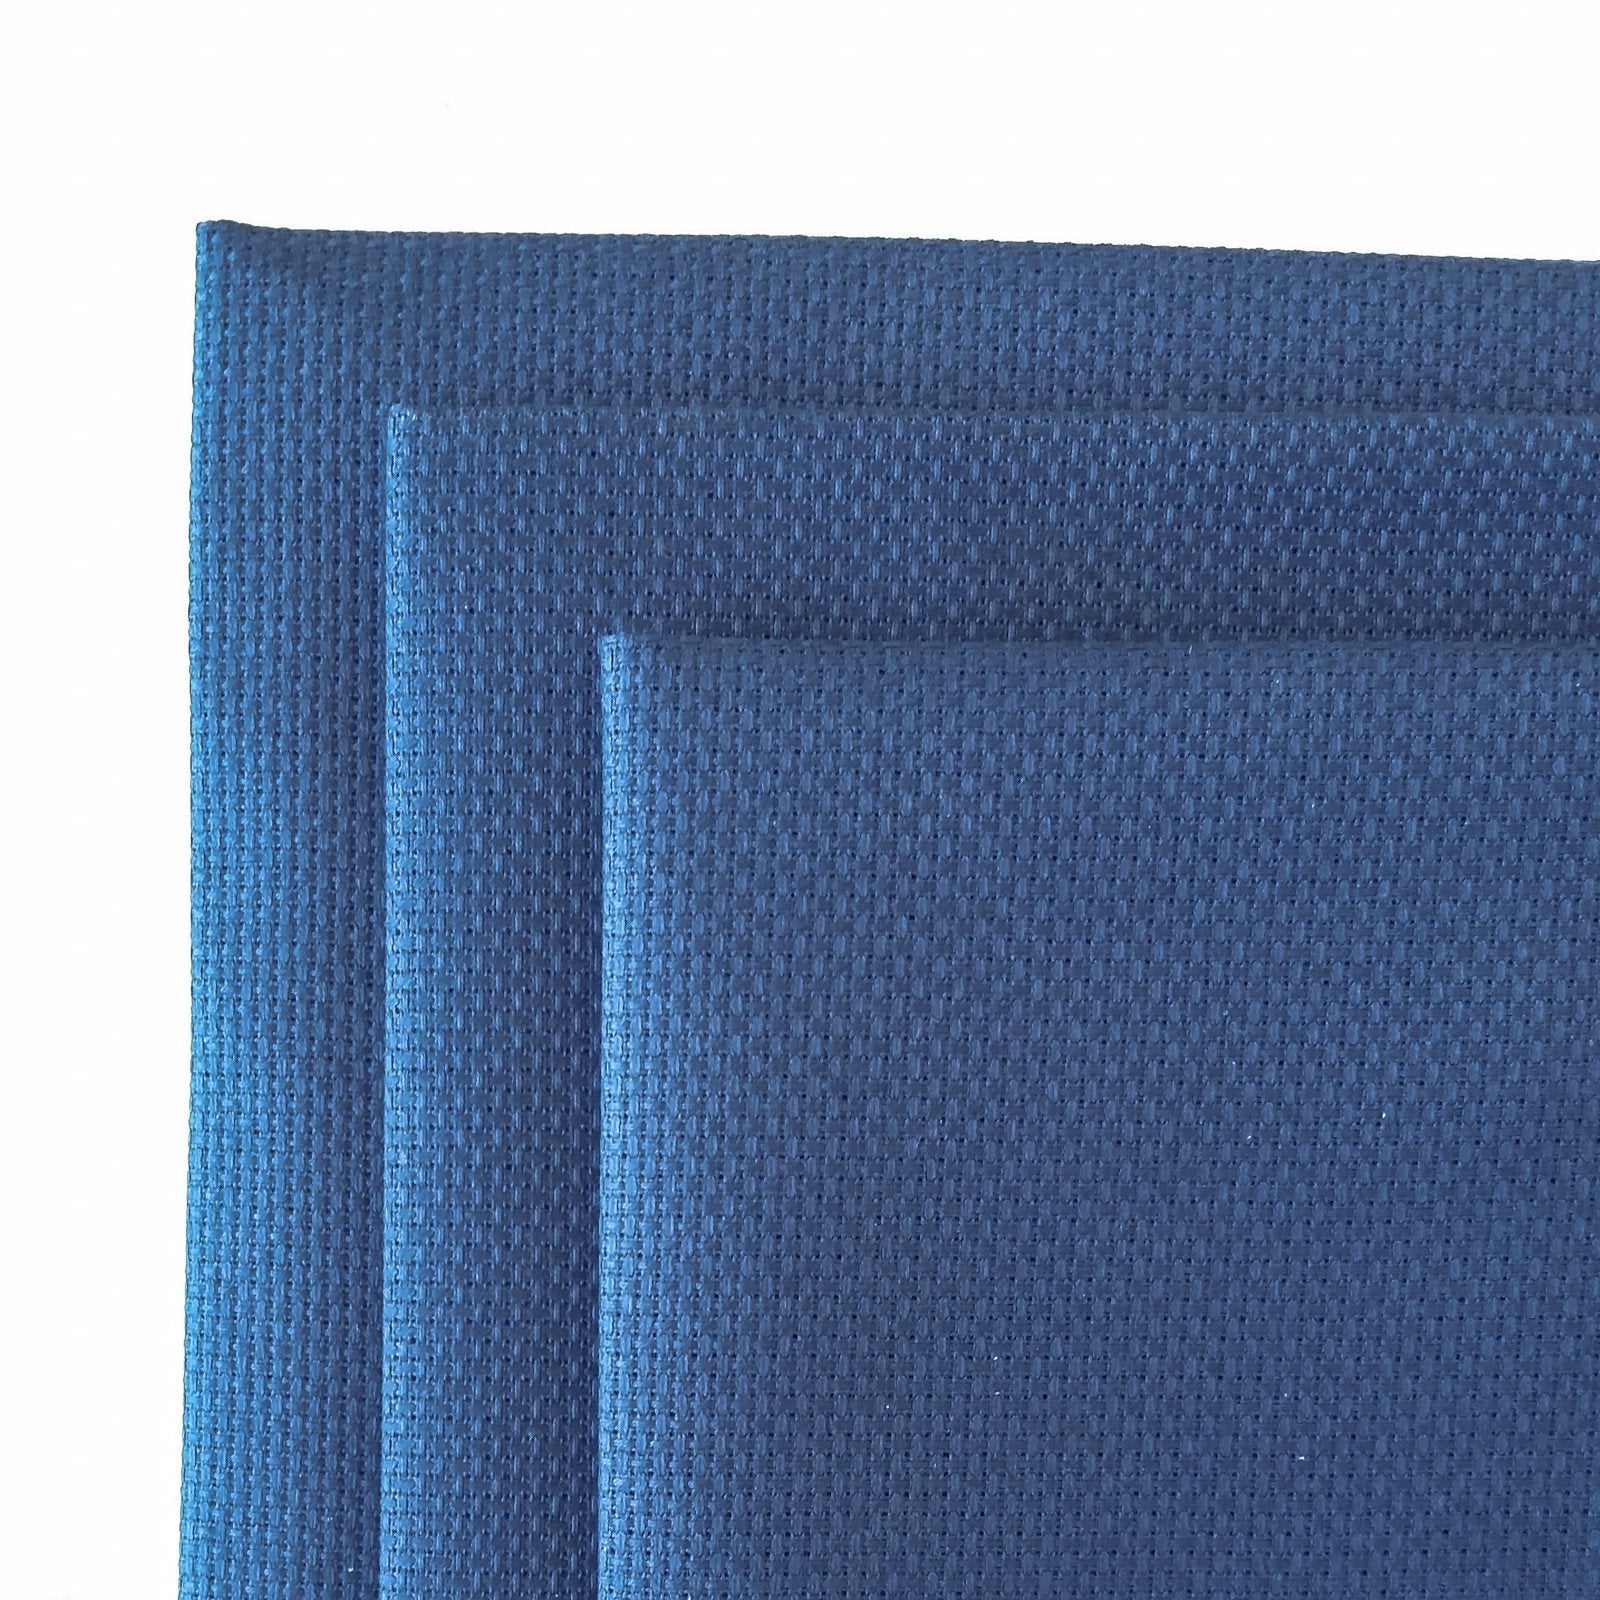 Light Blue Aida Cross Stitch Fabric - 14 Count - Stitched Modern